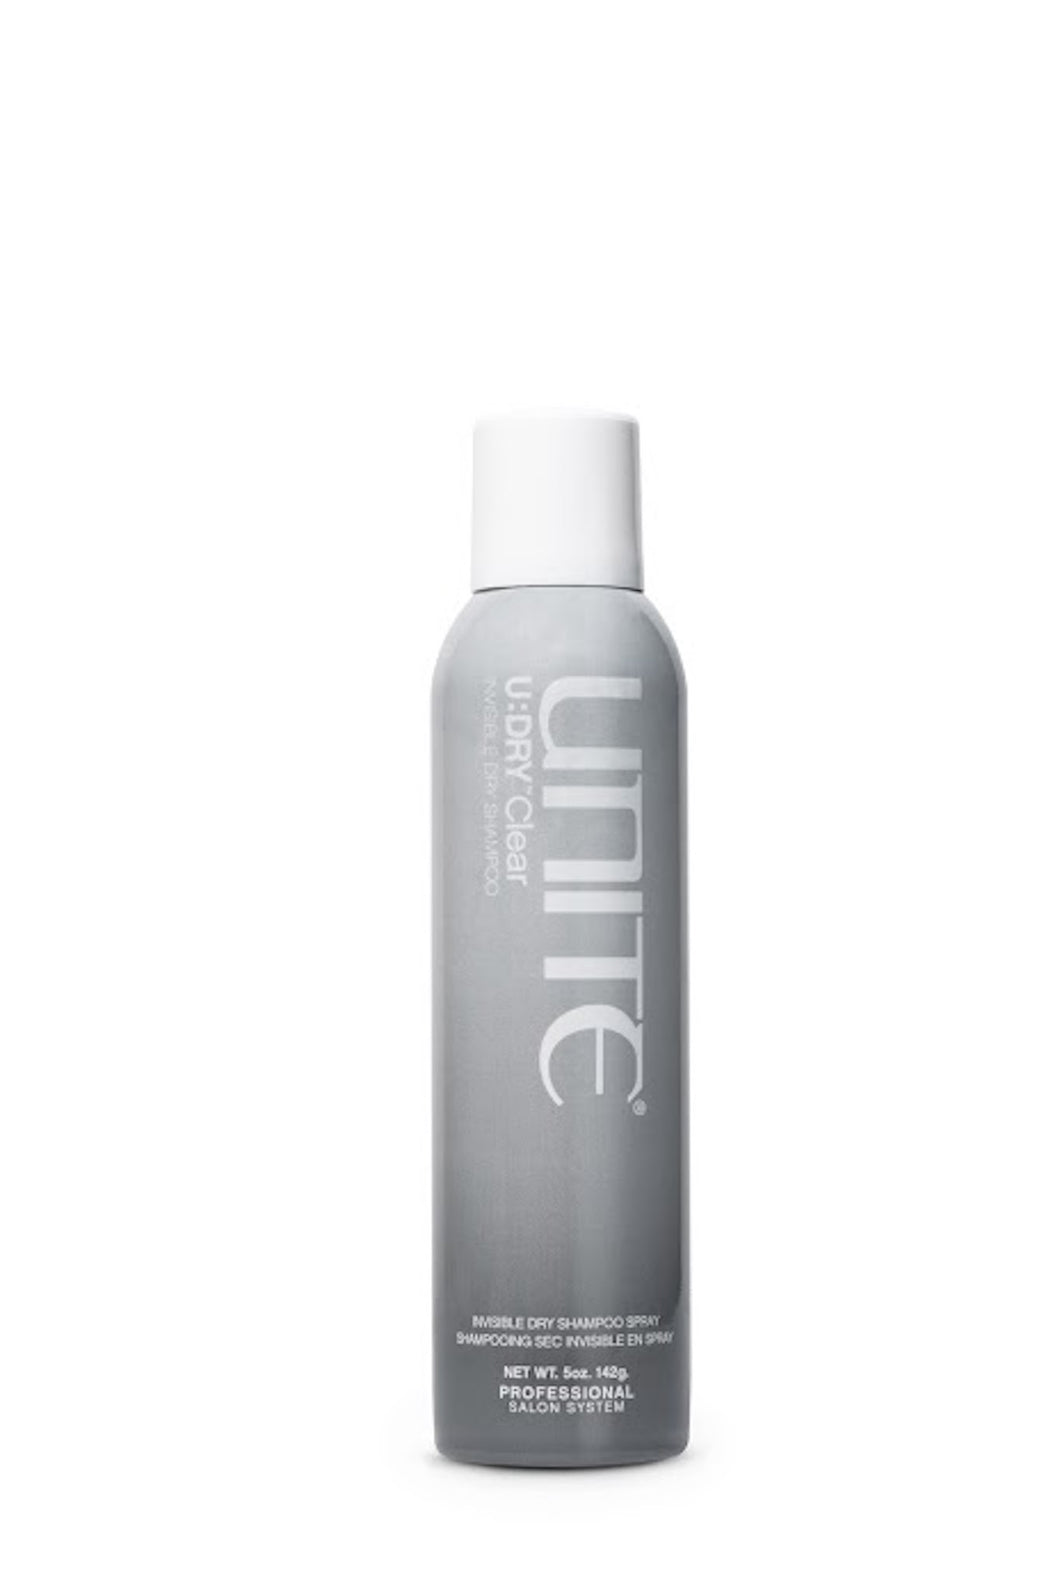 Unite - U:DRY Clear Dry Shampoo grey aerosol bottle with white cap.